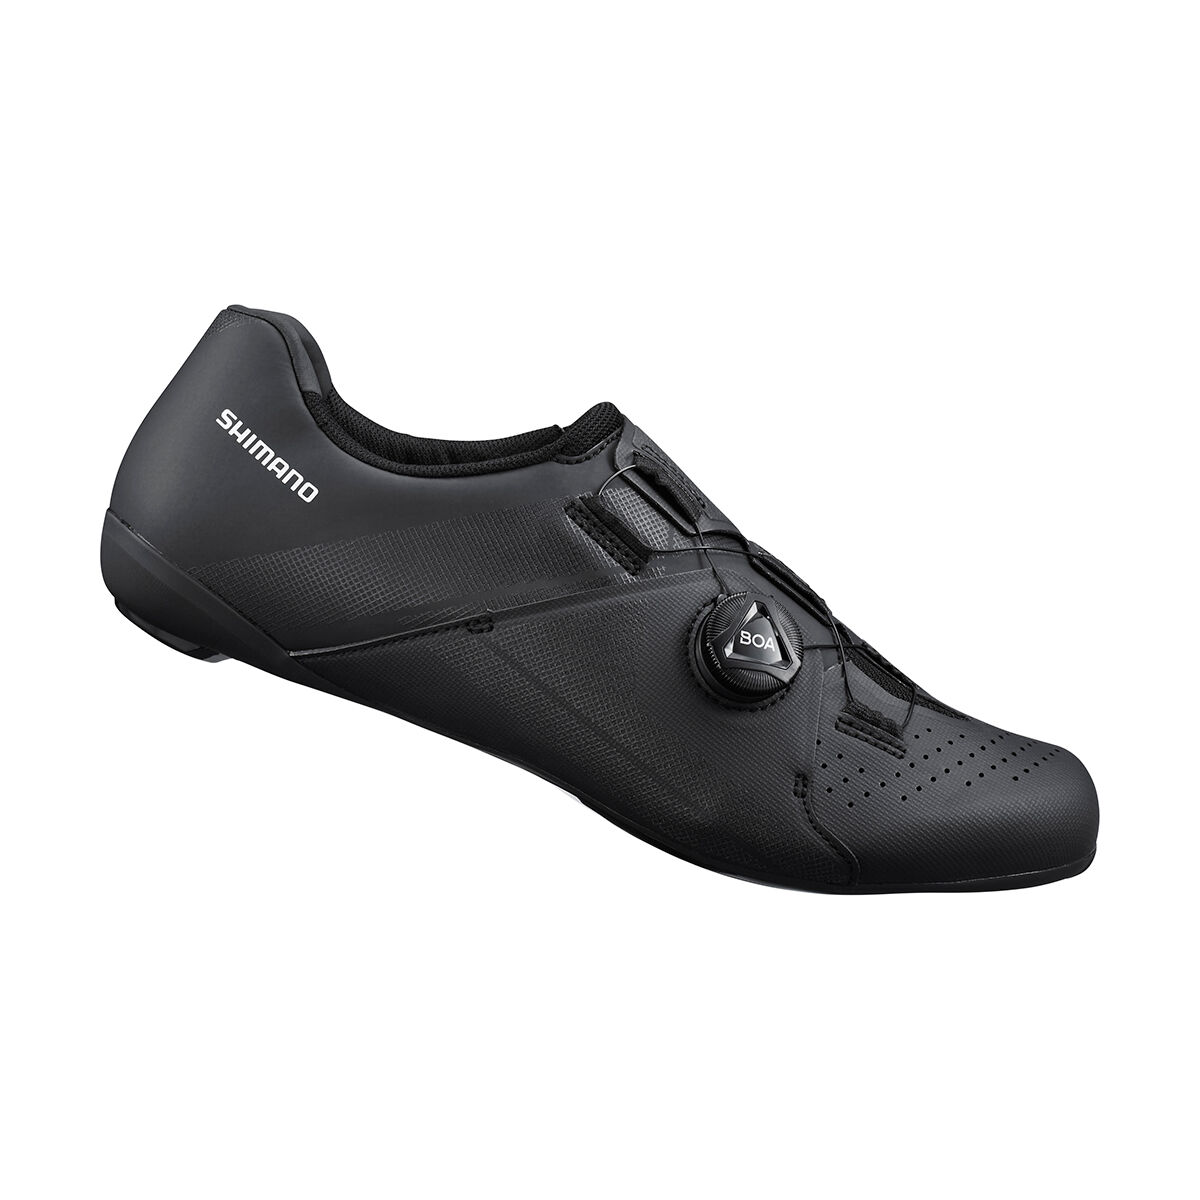 Shimano RC300 Large - Cycling shoes - Men's